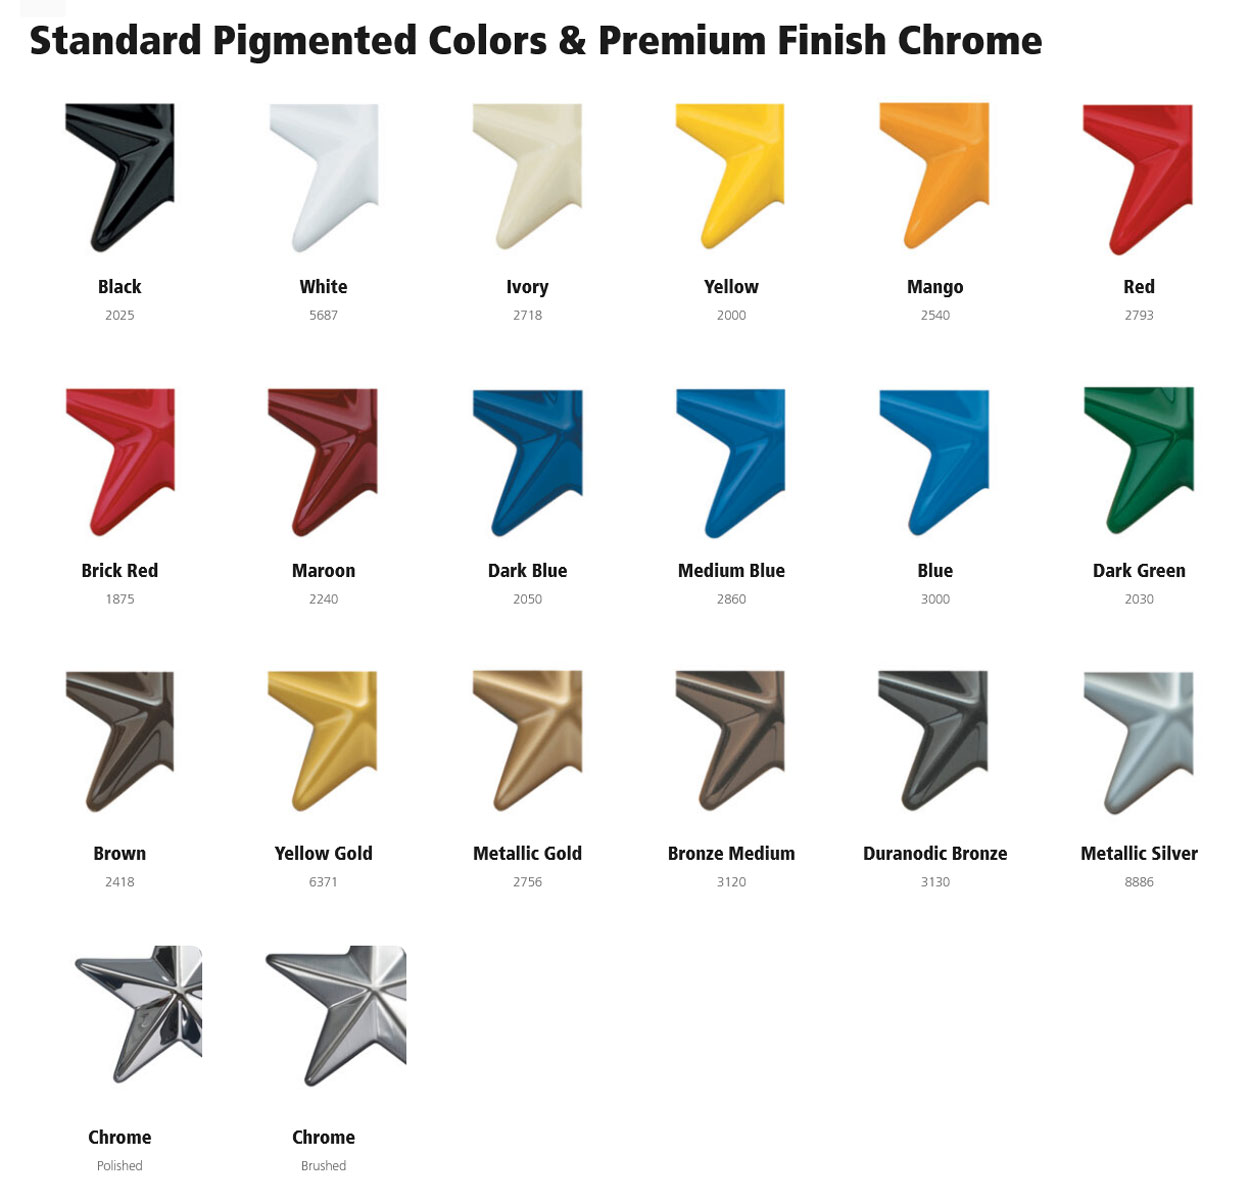 Standard Pigmented Colors